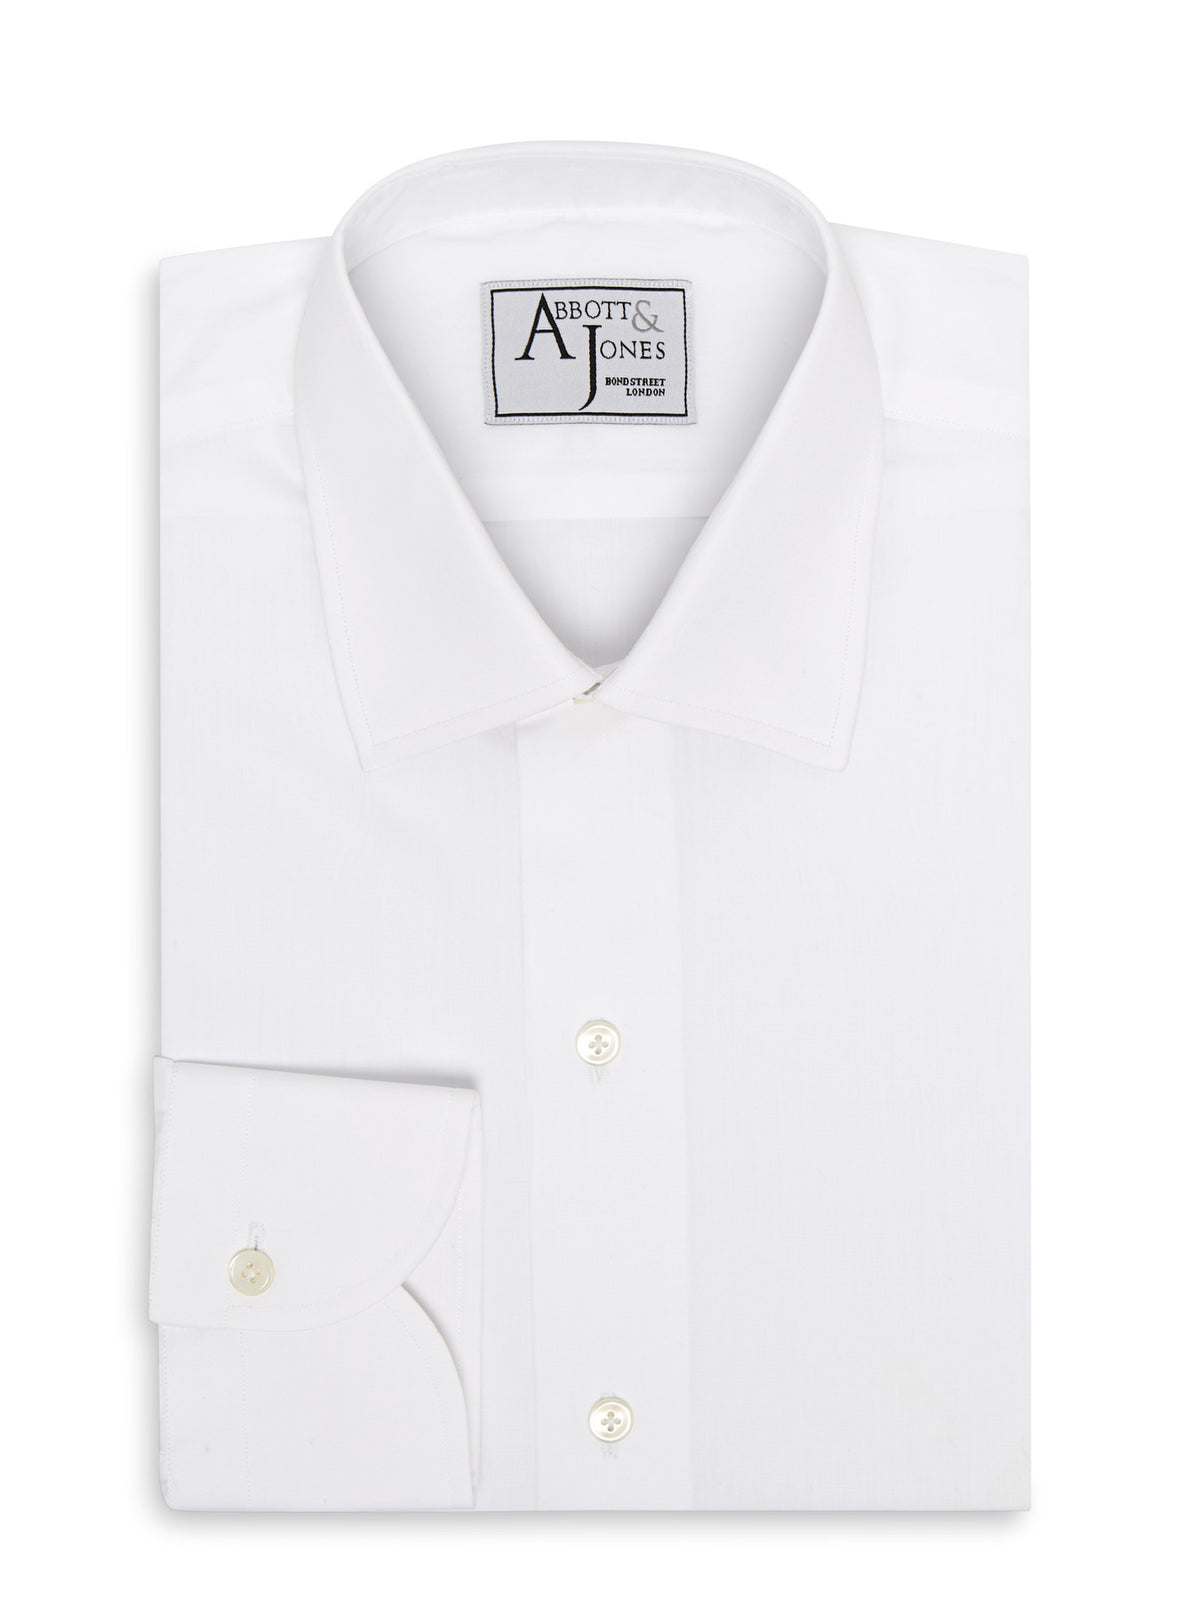 Bespoke - The Essential White Shirt